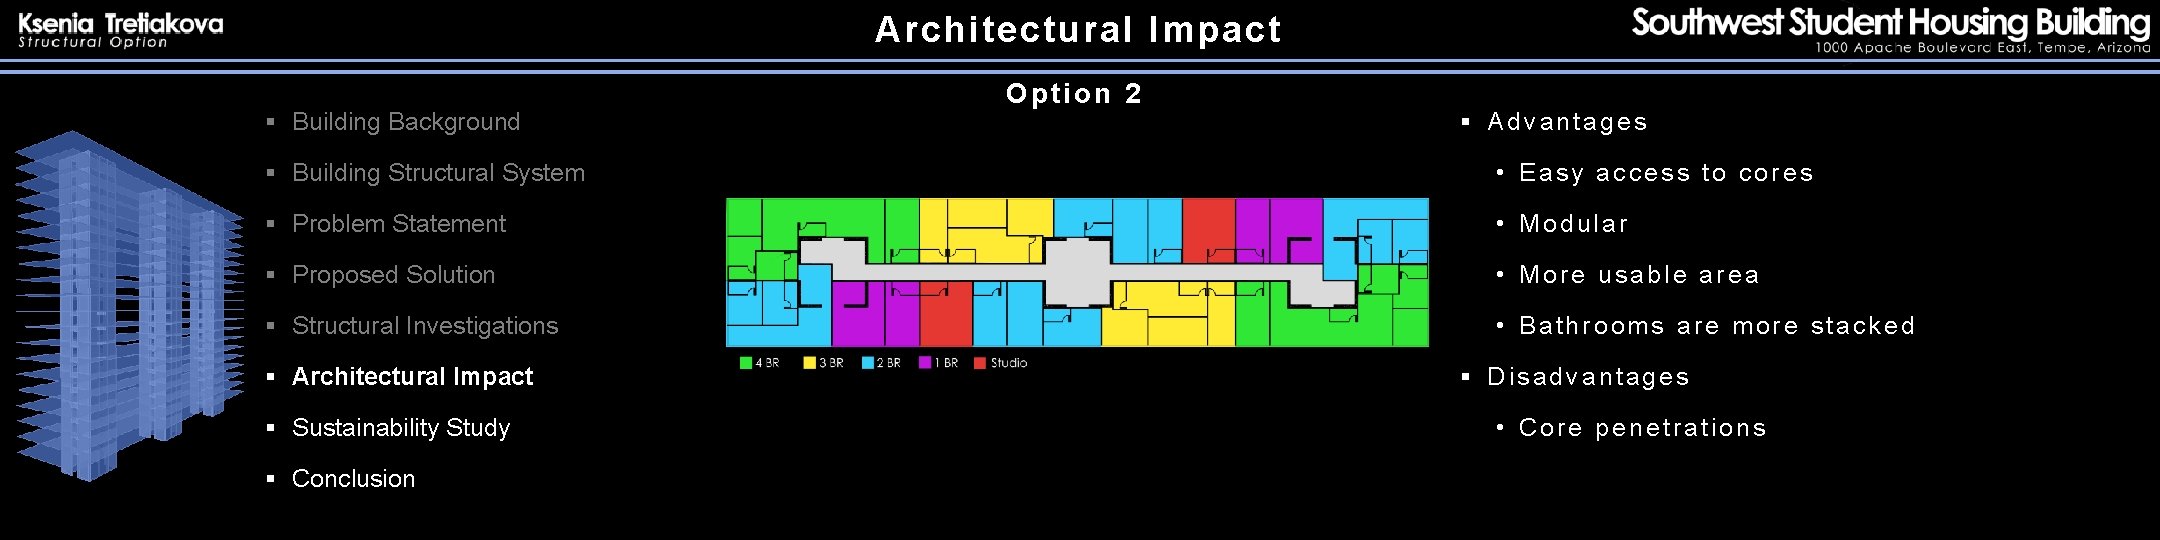 Architectural Impact § Building Background Option 2 § Advantages § Building Structural System •